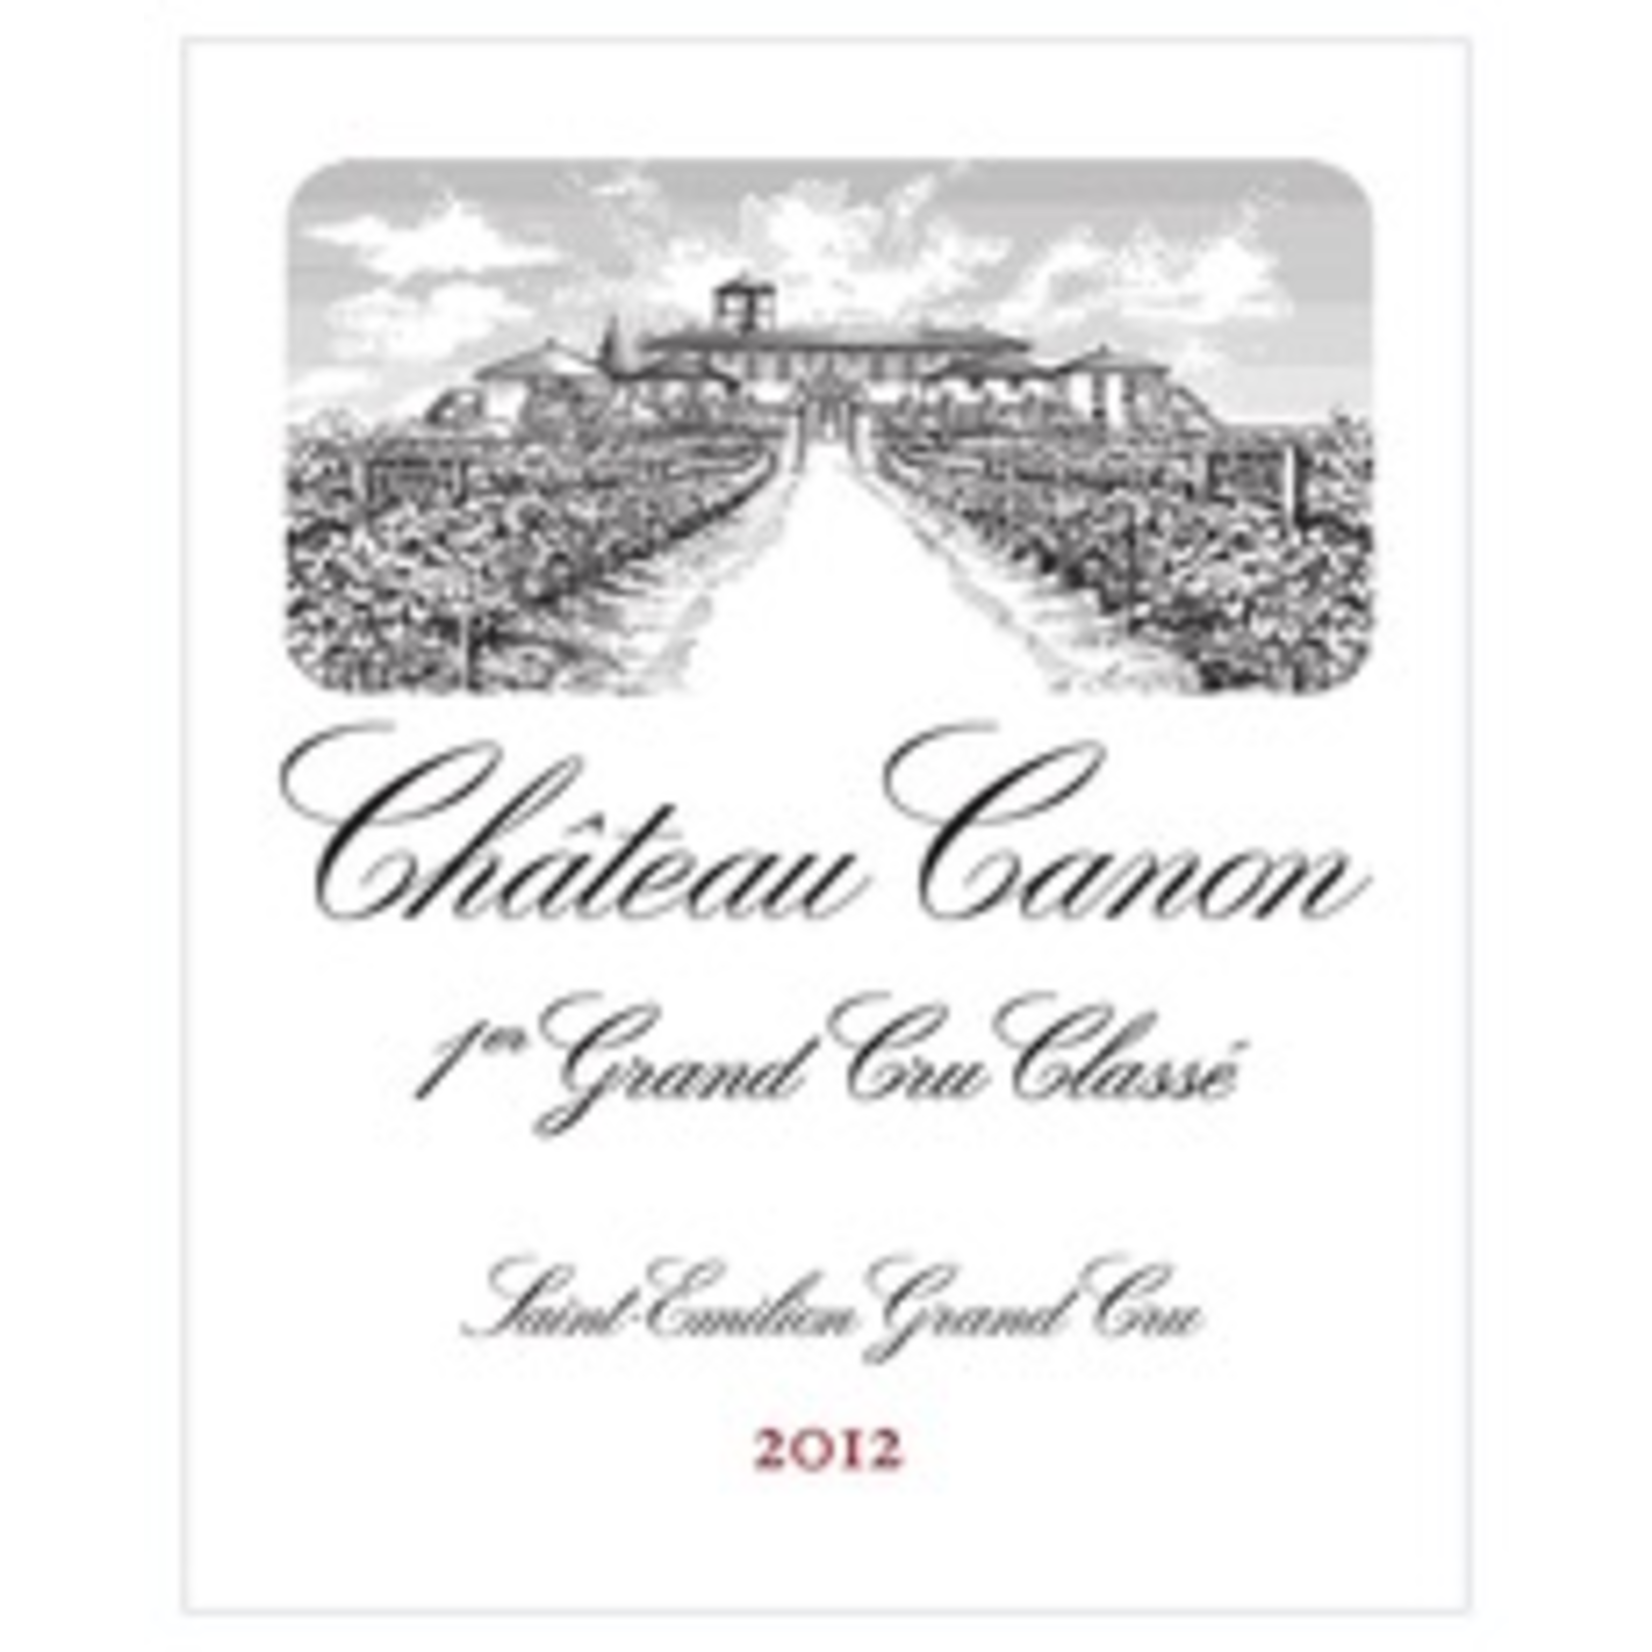 Wine Chateau Canon Saint Emilion Grand Cru 2012